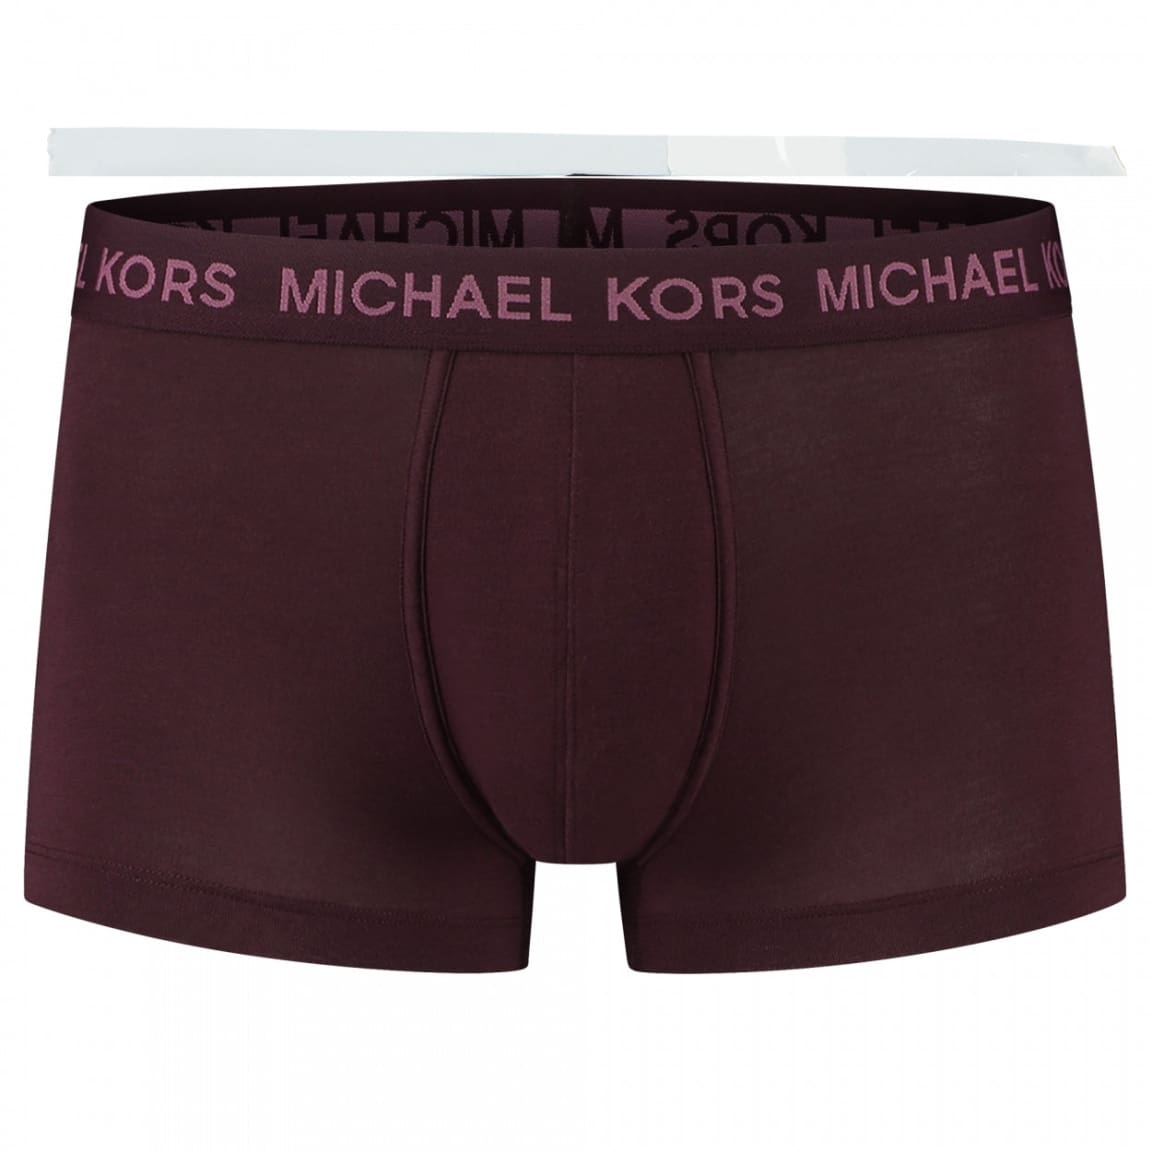 Michael Kors  Michael-Kors Men's 3-Pack Bordeaux S.T Fashion Trunk -  MENSWEARR